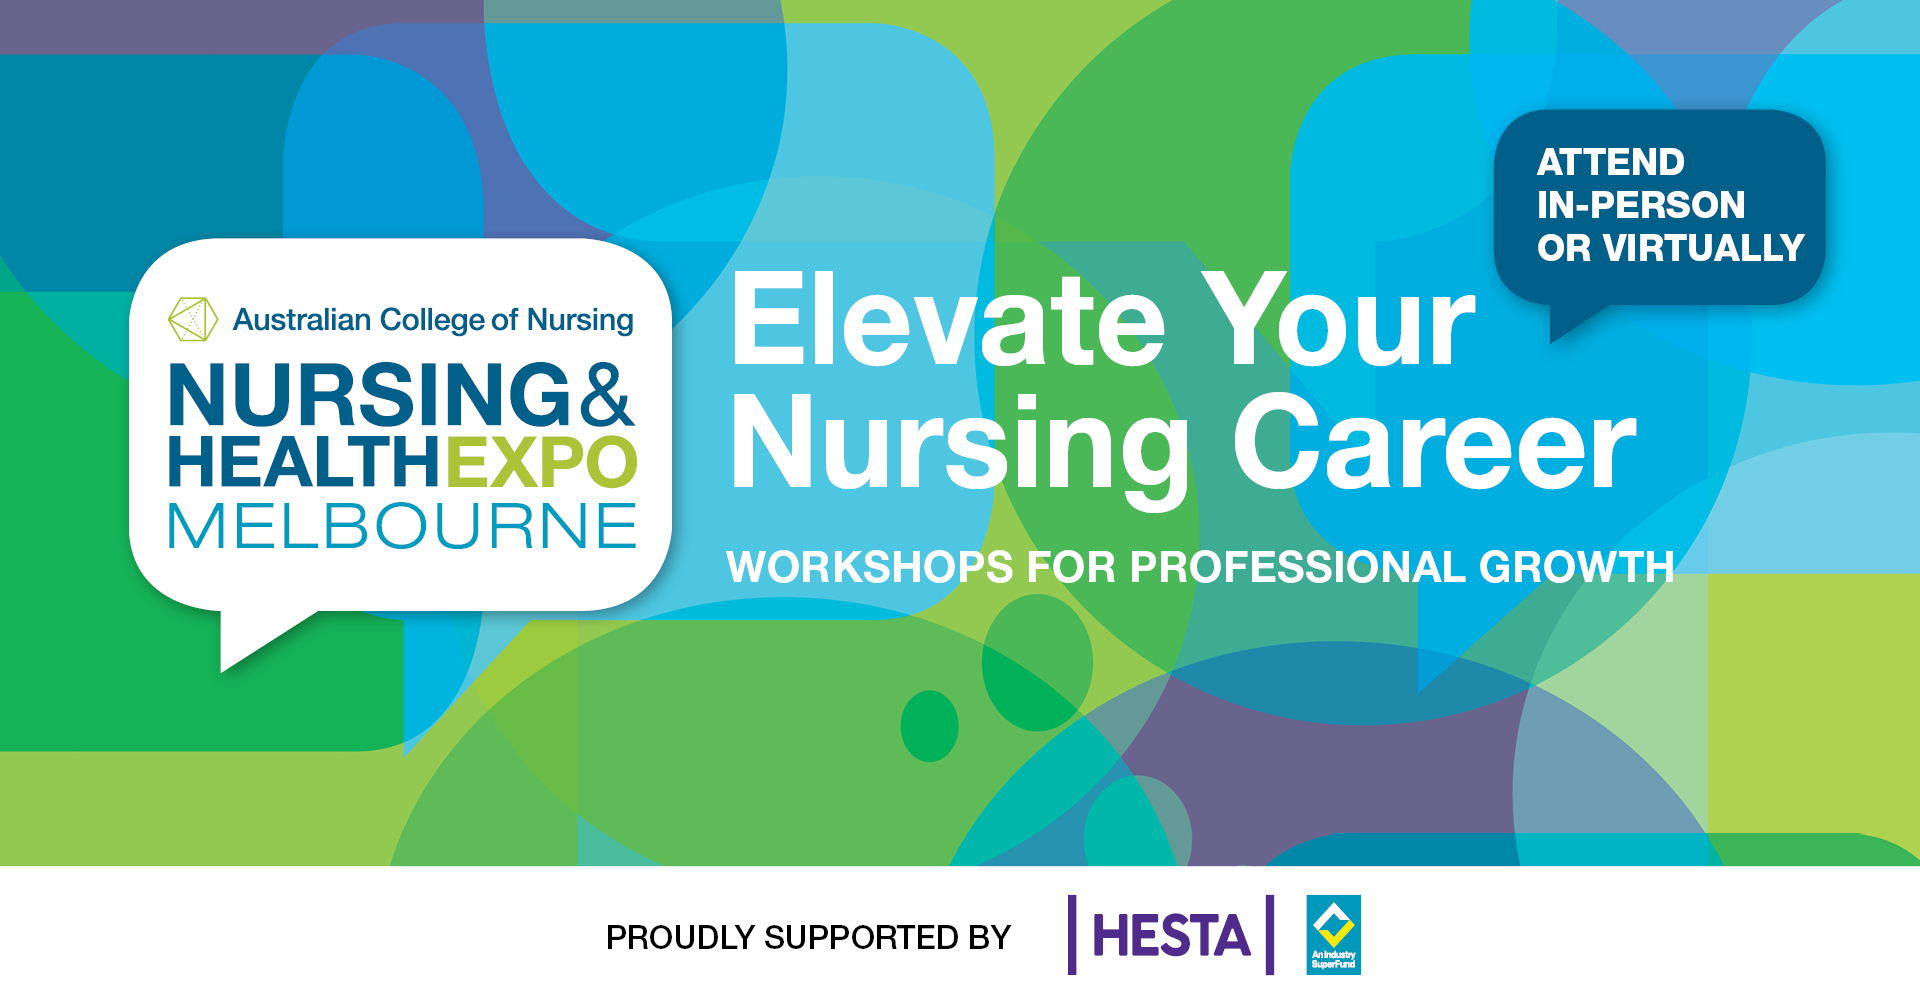 Nursing Education and Career Workshops